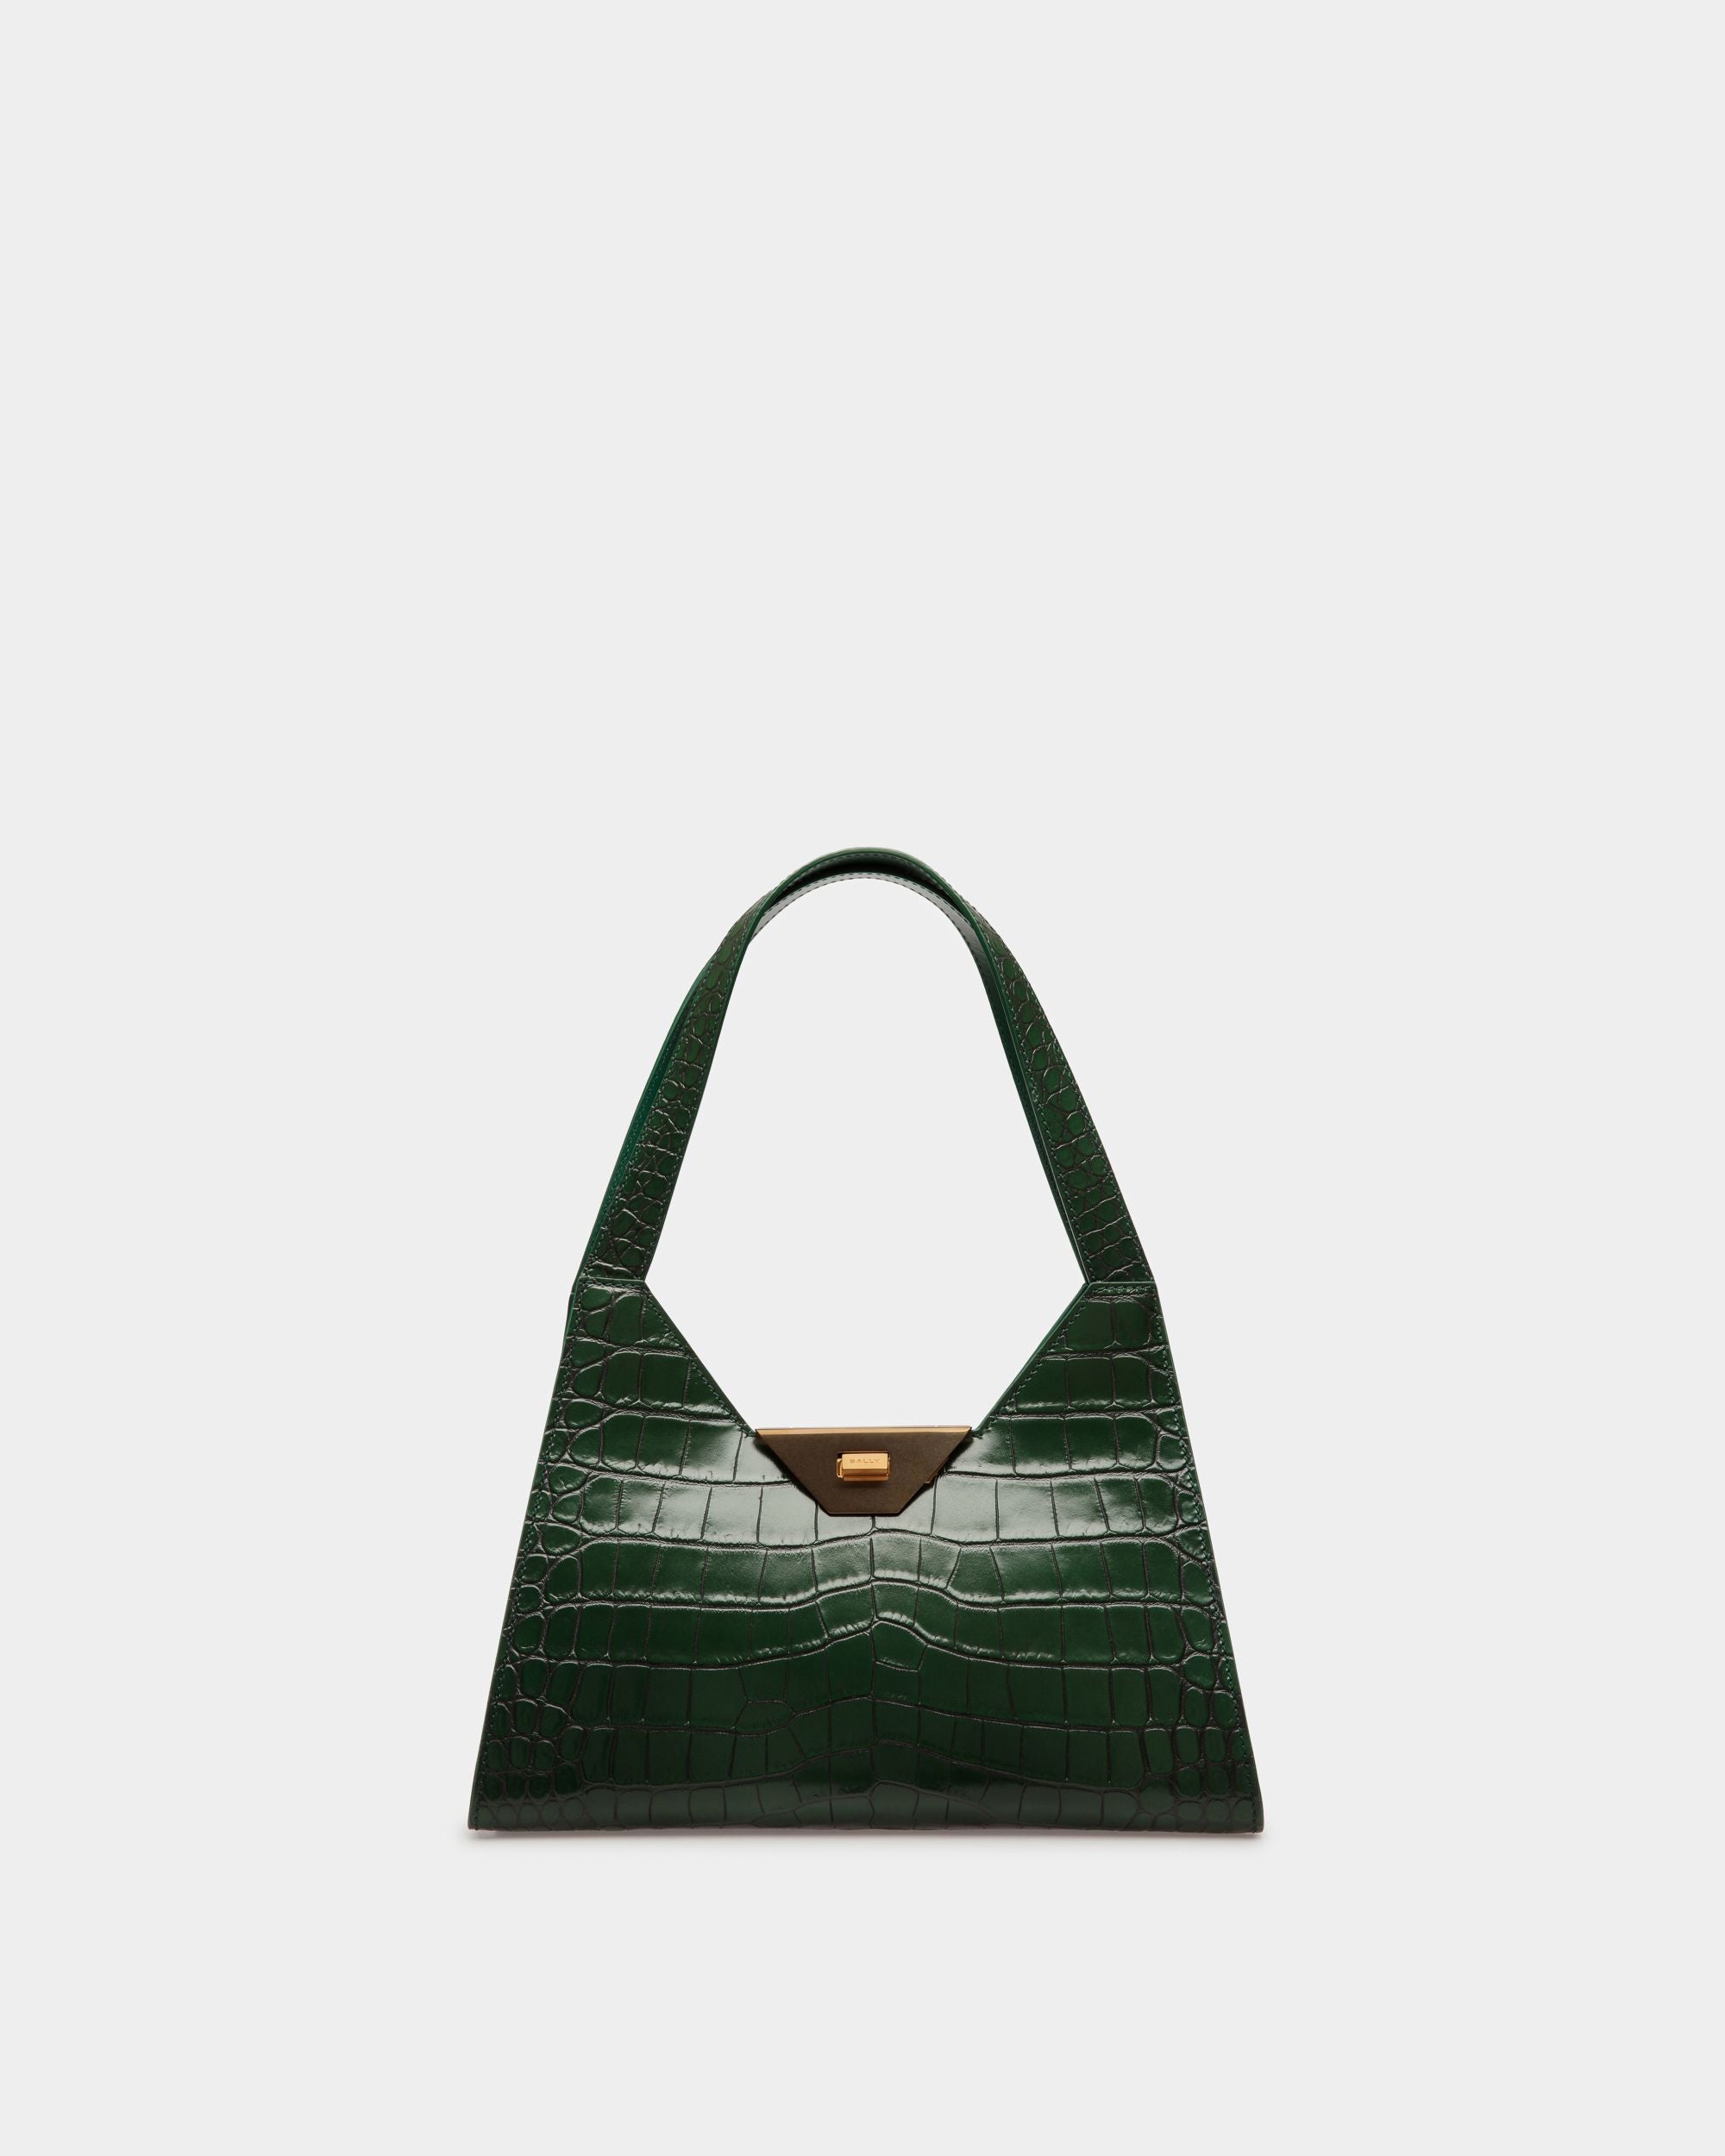 Tilt Shoulder Bag | Women's Bags | Green Crocodile Print Leather | Bally | Still Life Front